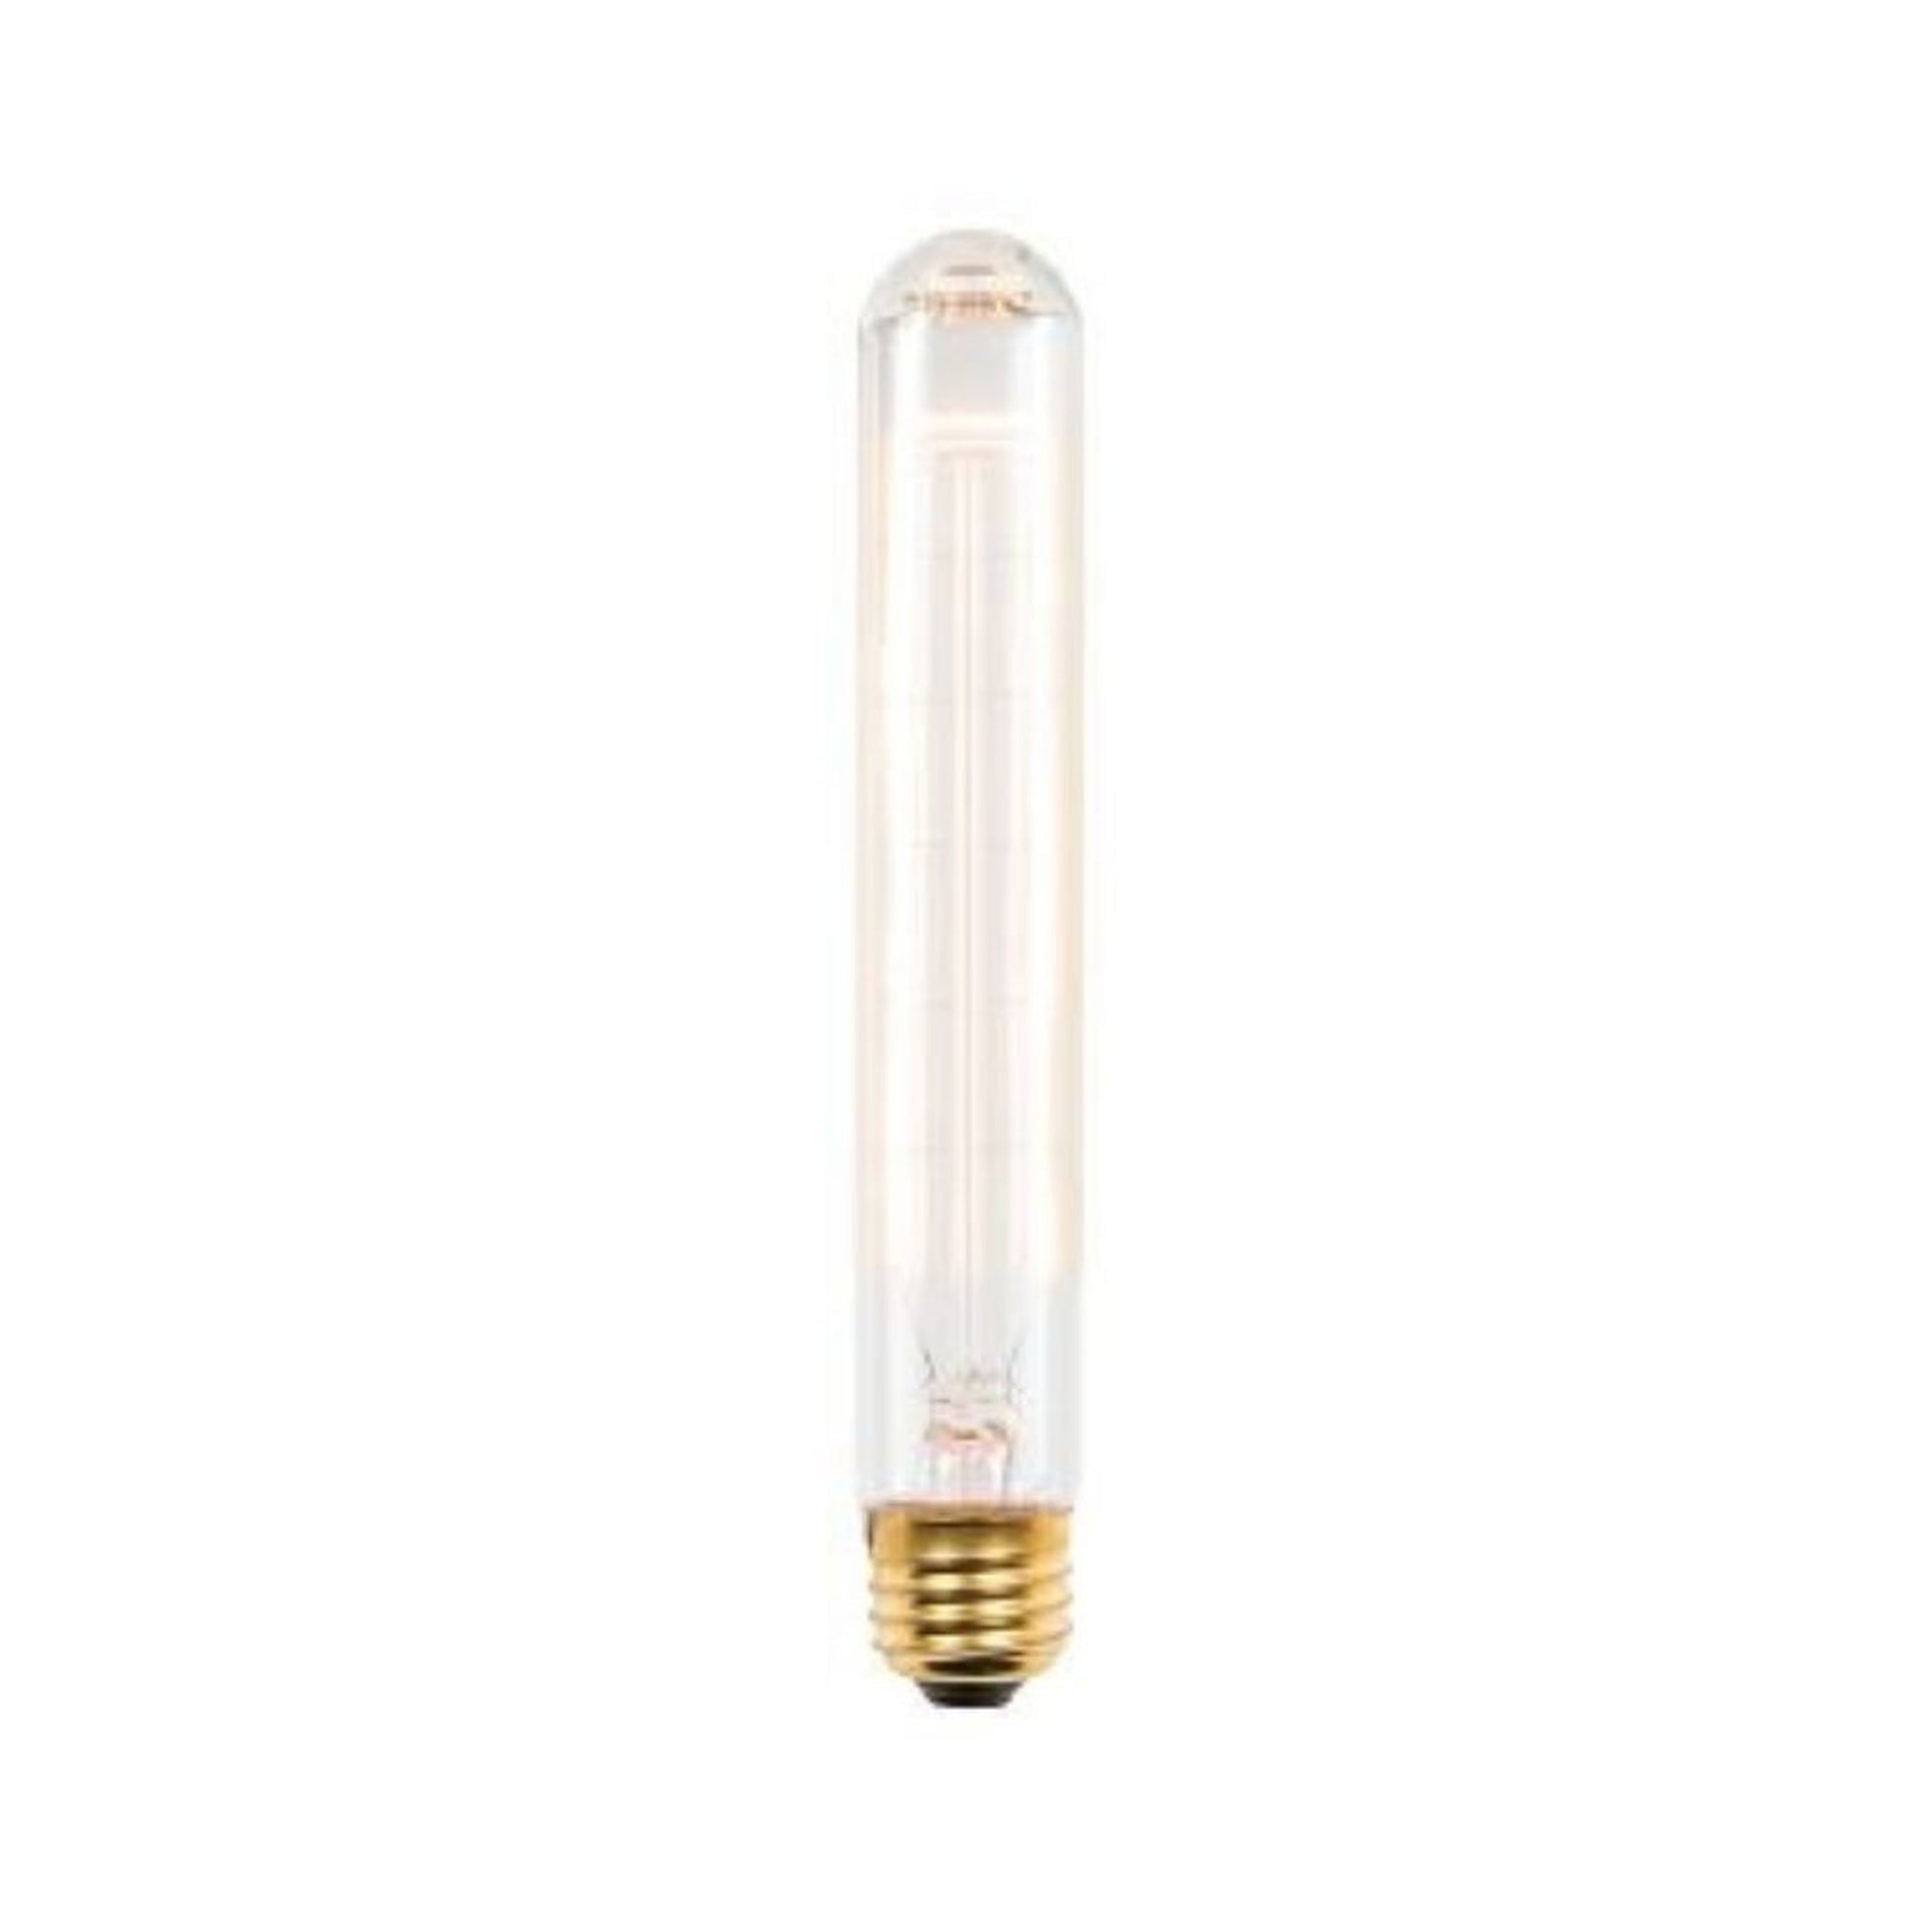 Craftmade 60-Watt T9 Clear Finish, E26 Medium Base, 7.3" M.O.L., 2200K Warm White Incandescent Light Bulb